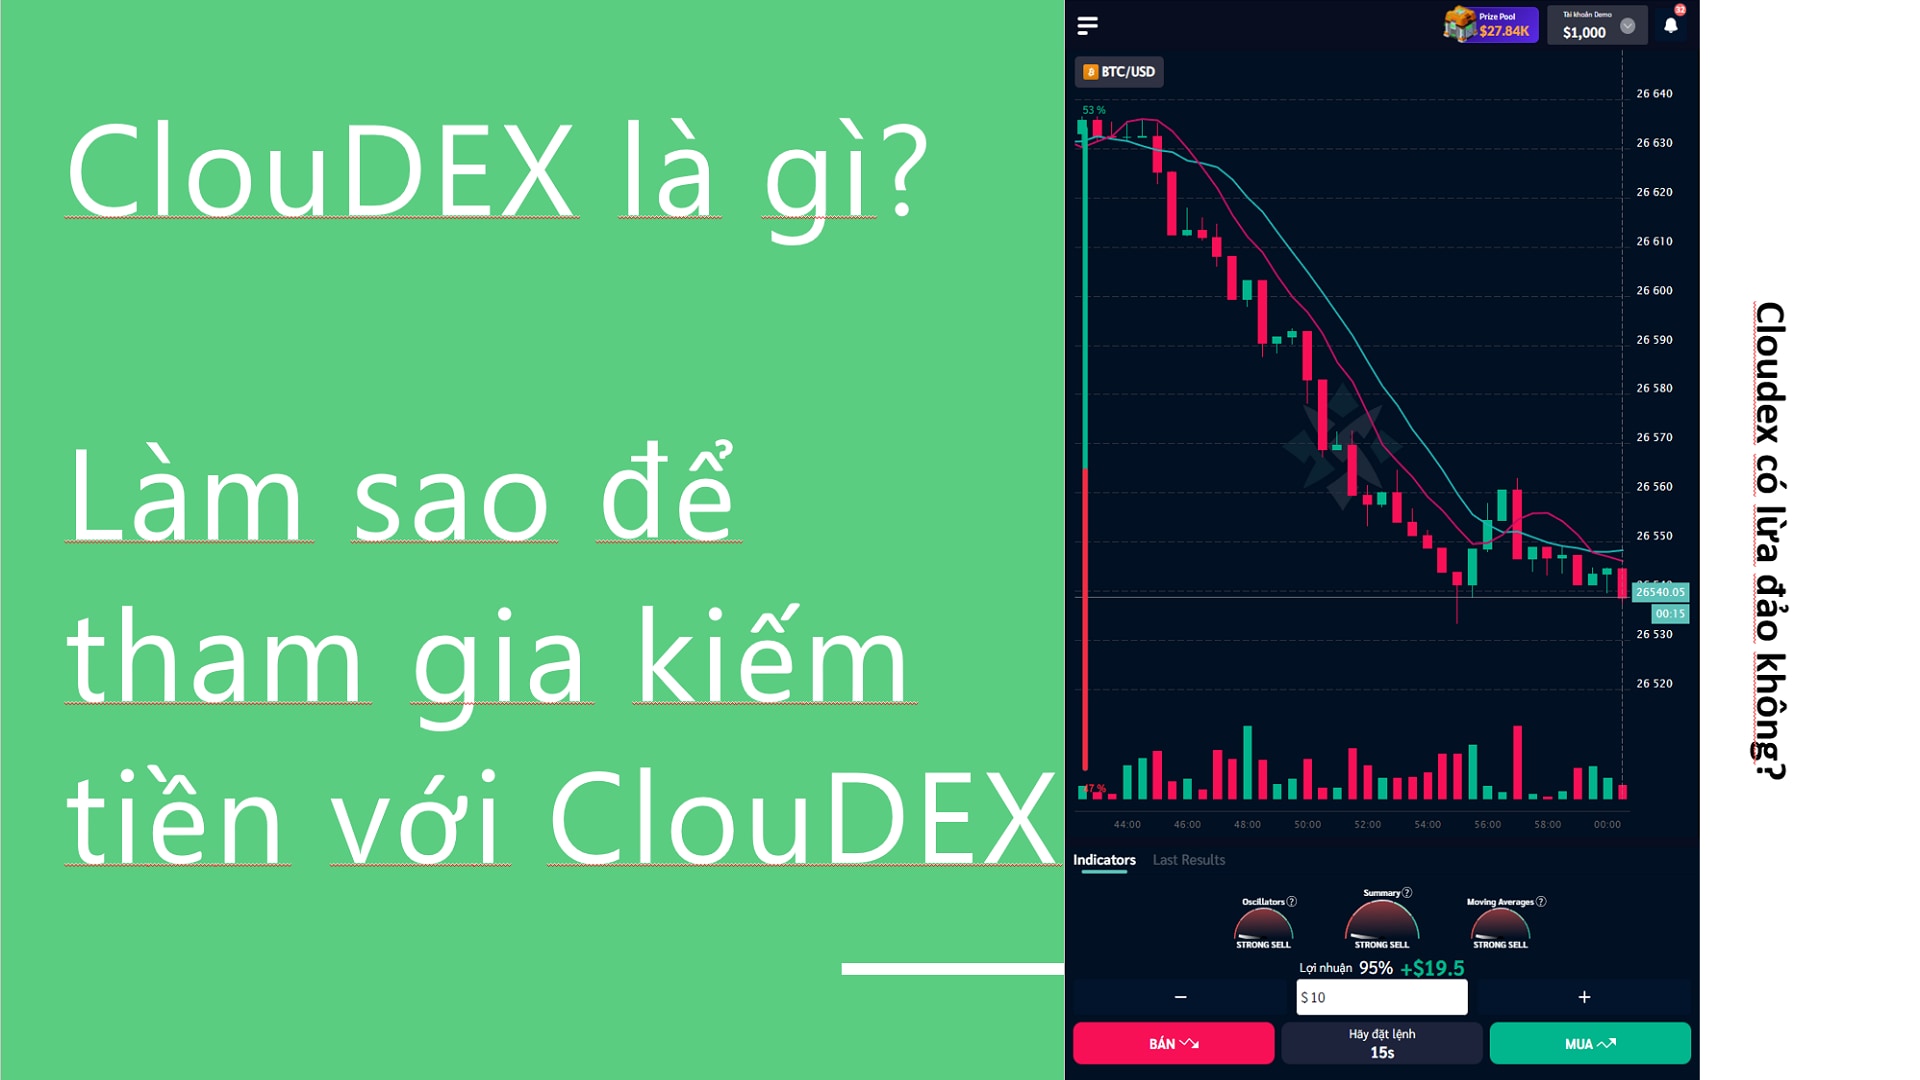 Cloudex là gì?